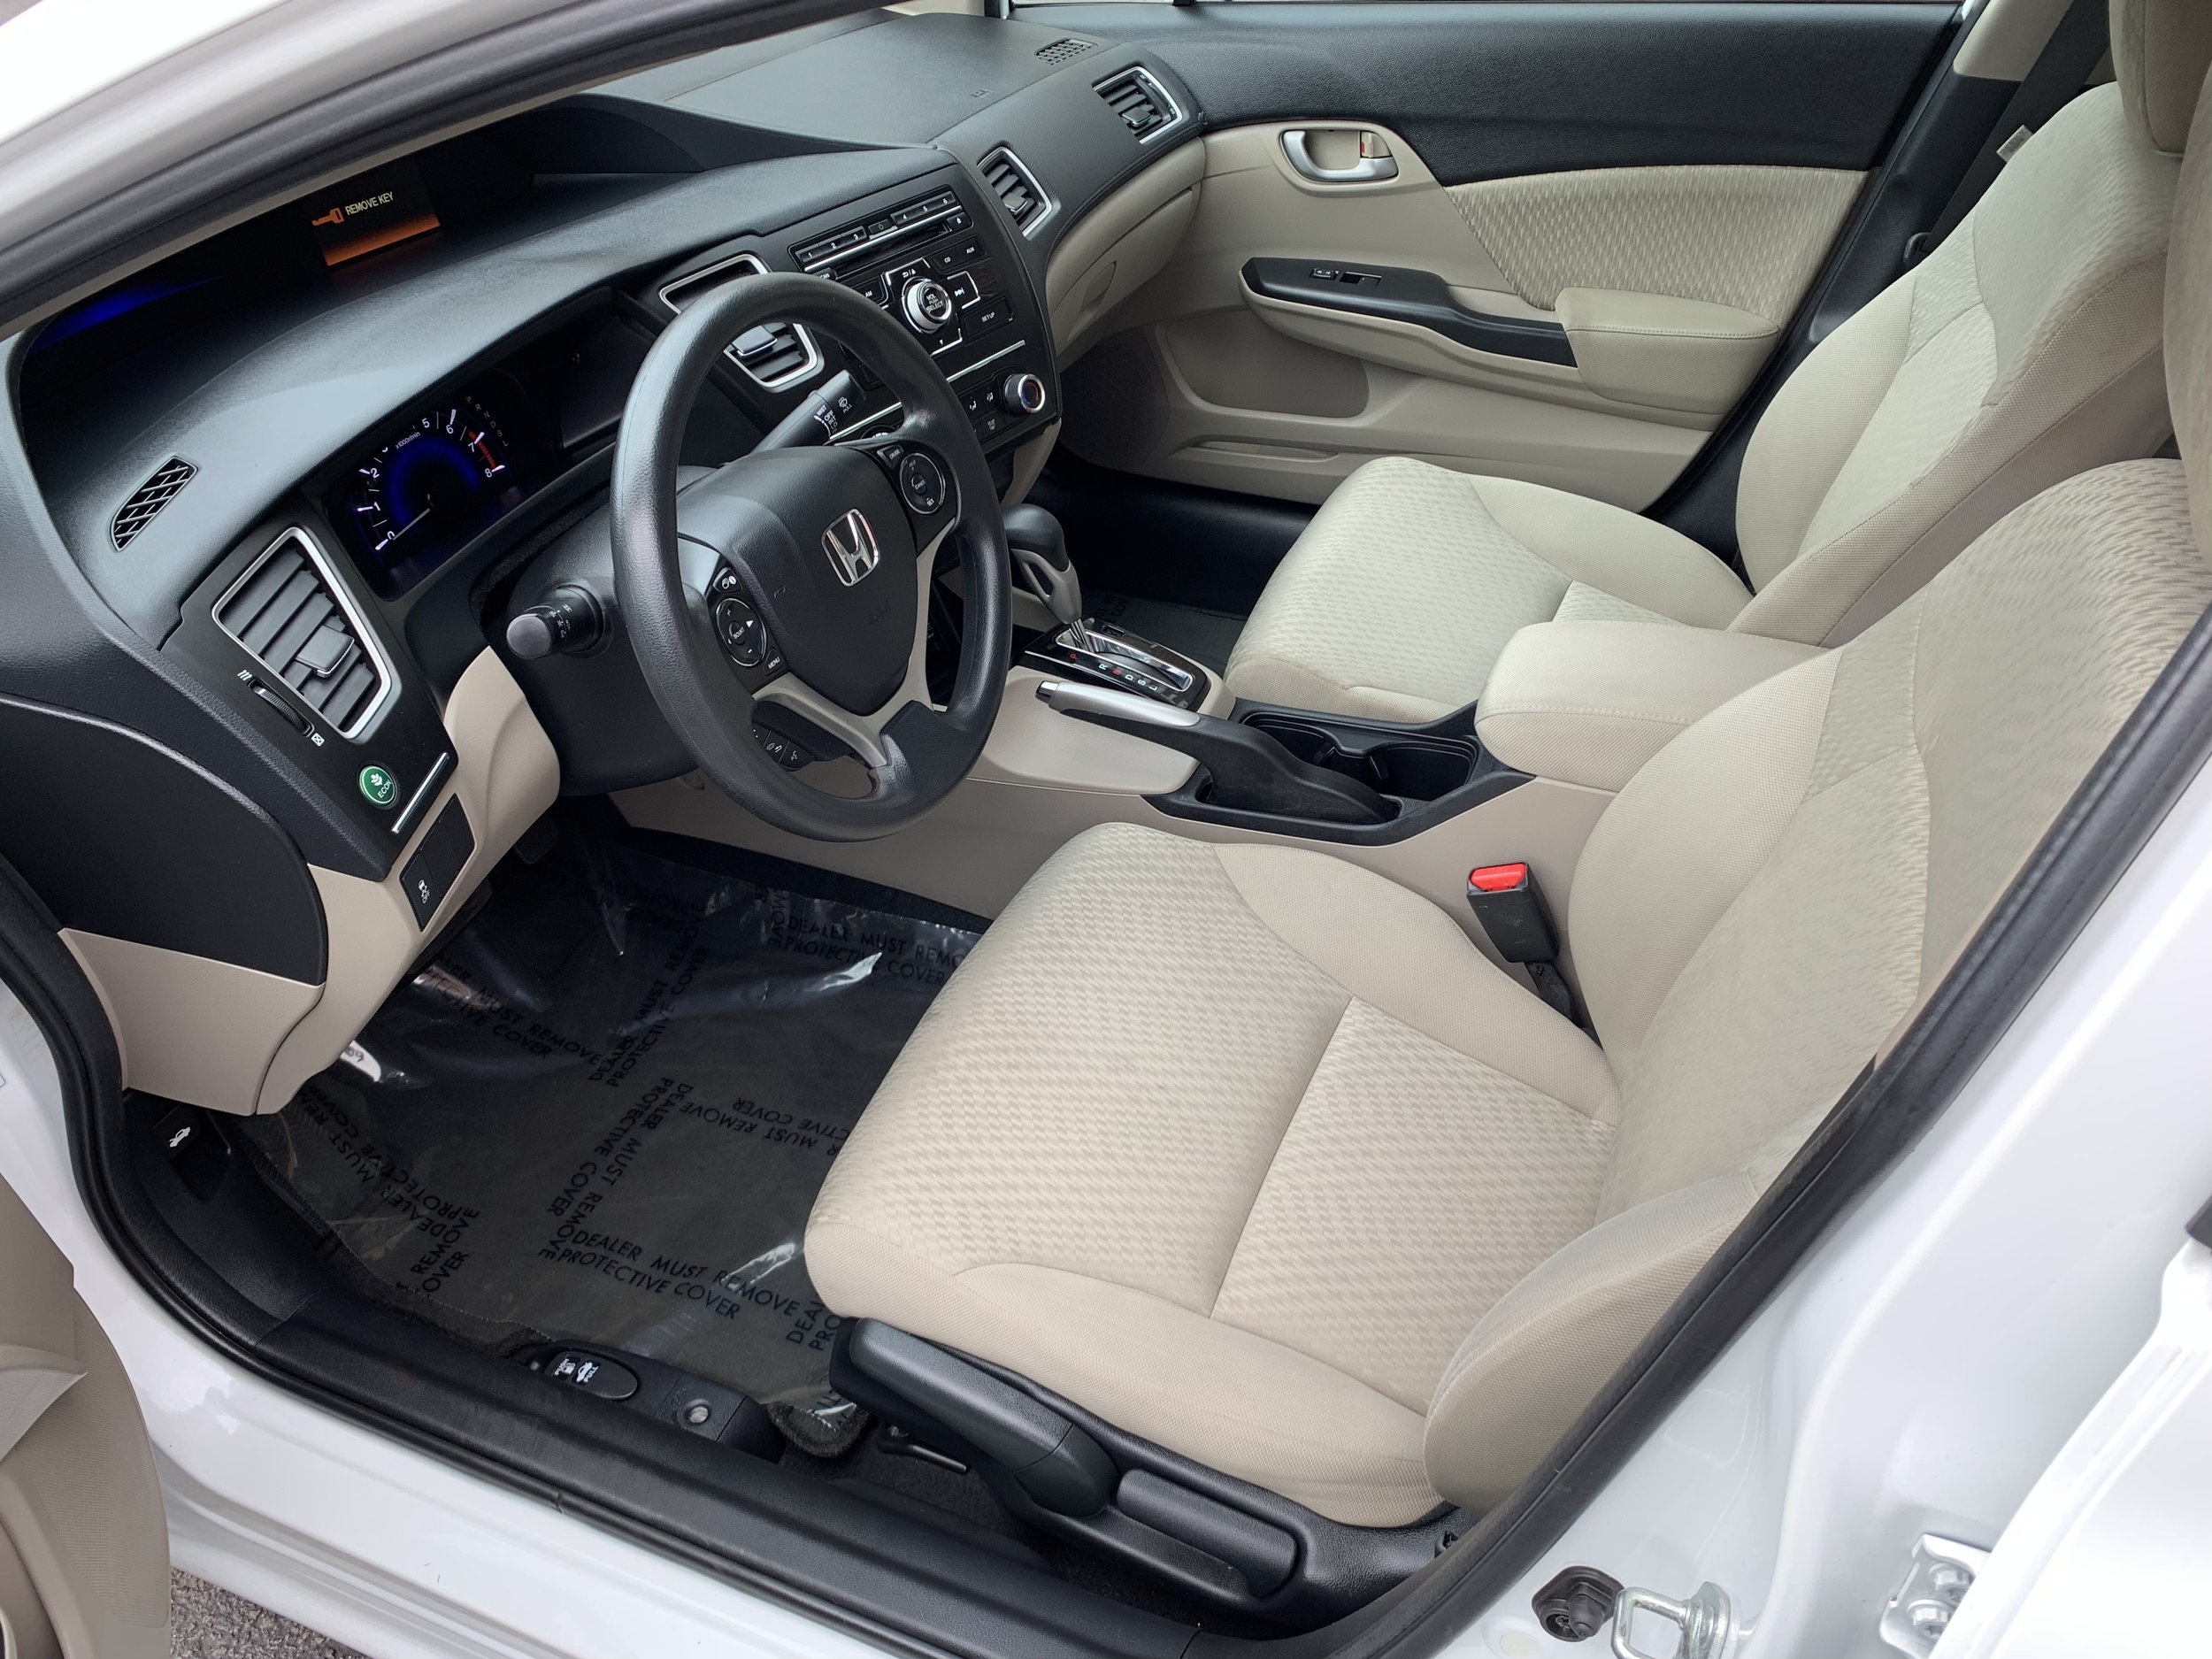 JIERS For Honda Civic 2012-2015 9th Generation, LHD/RHD Sun Protection Car  Interior Dashboard Cover Dashboard Mat Carpet Cushion Car Styling :  Amazon.de: Automotive